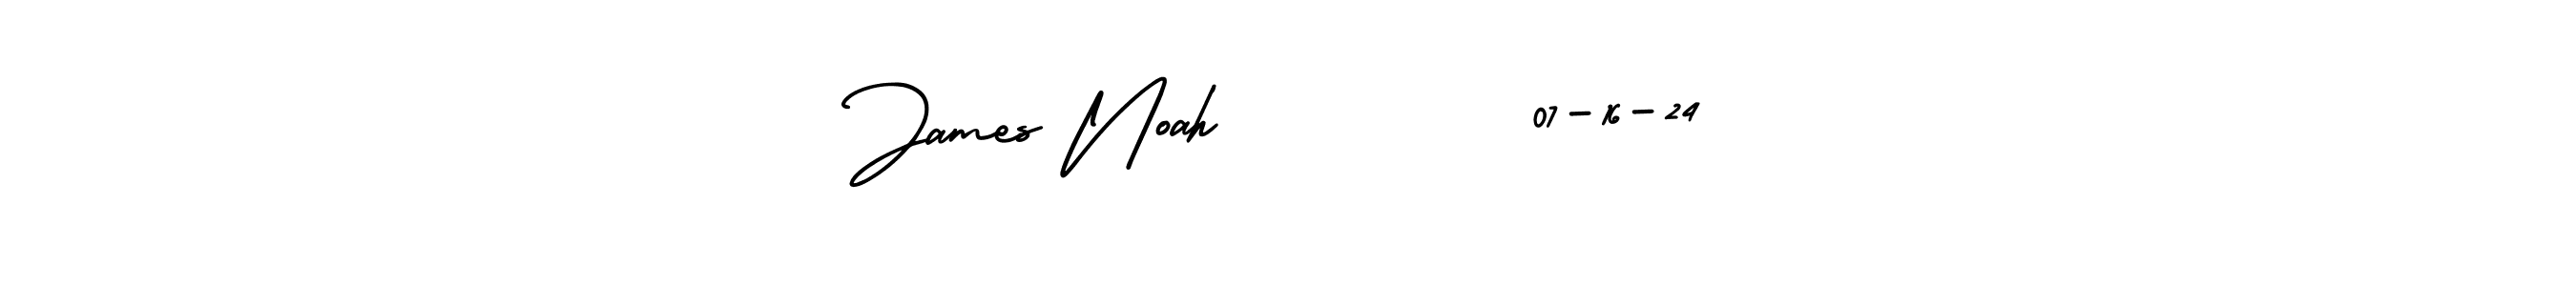 How to make James Noah         07-16-24 signature? AmerikaSignatureDemo-Regular is a professional autograph style. Create handwritten signature for James Noah         07-16-24 name. James Noah         07-16-24 signature style 3 images and pictures png